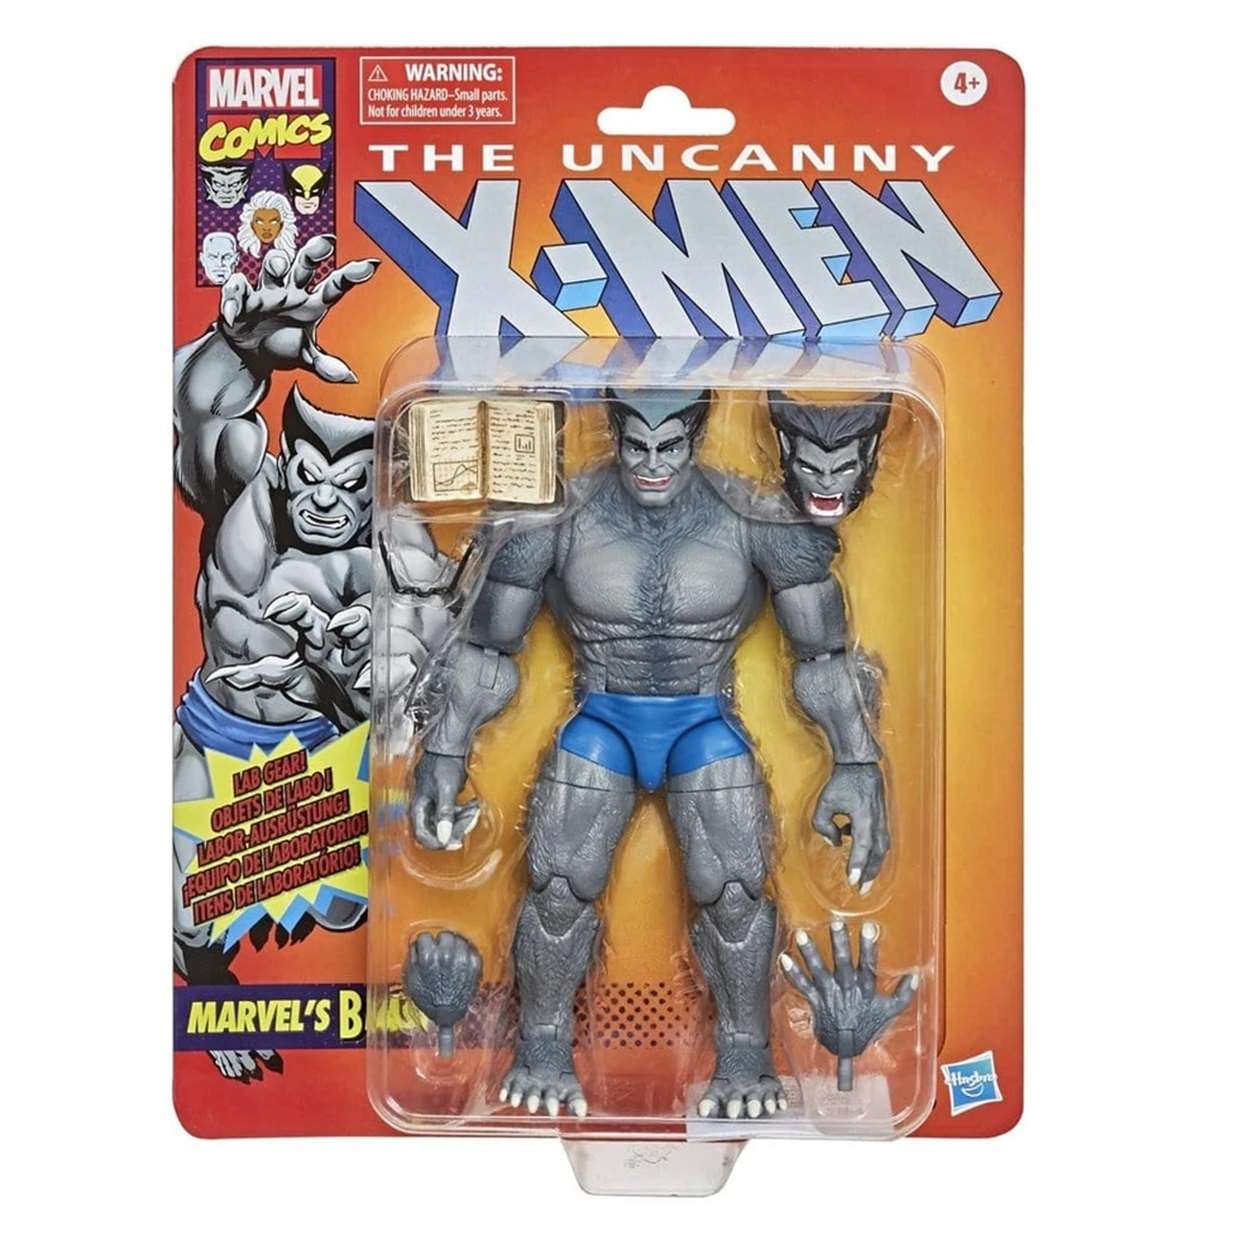 Marvels Beast Figura The Uncanny X Men Comic Vintage 